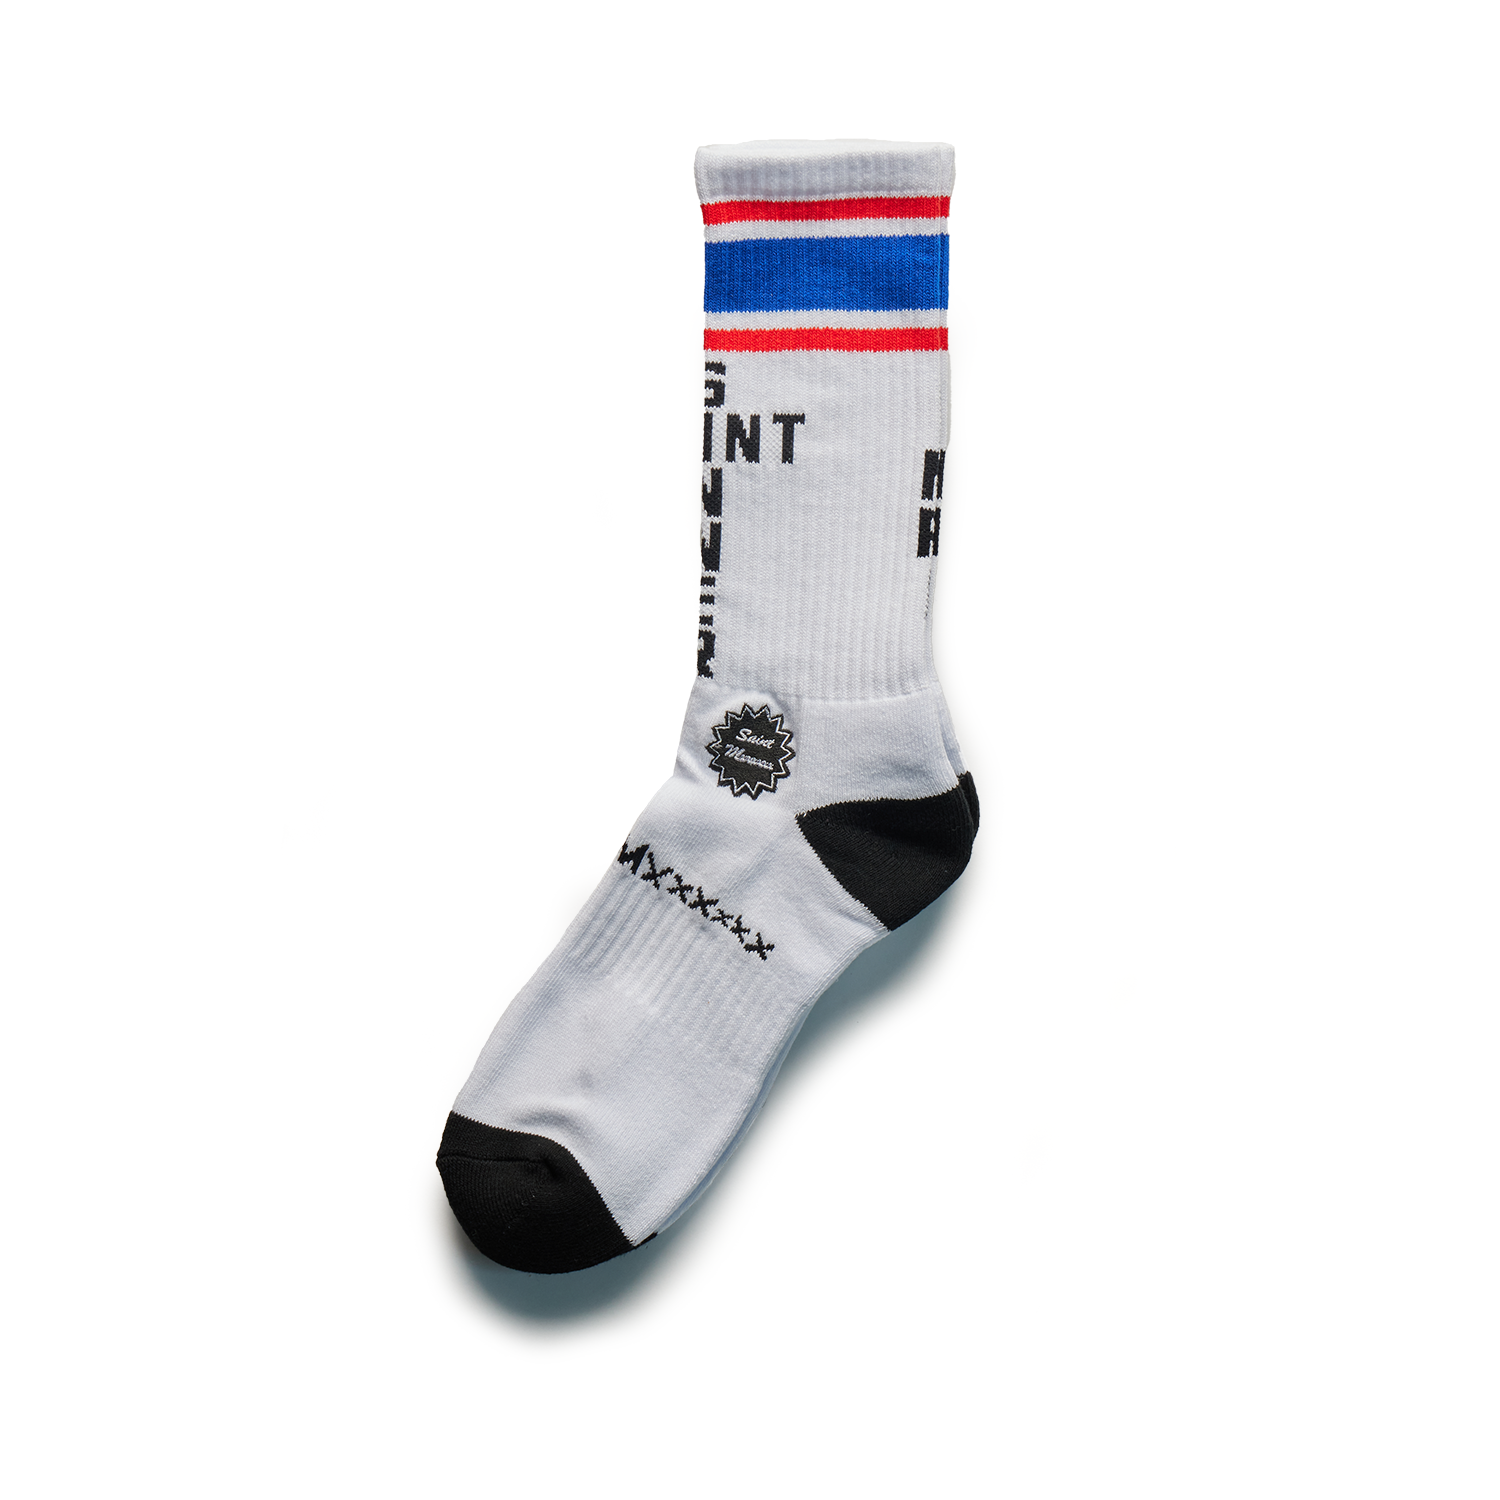 SAINT Mxxxxxx - USA Socks product image